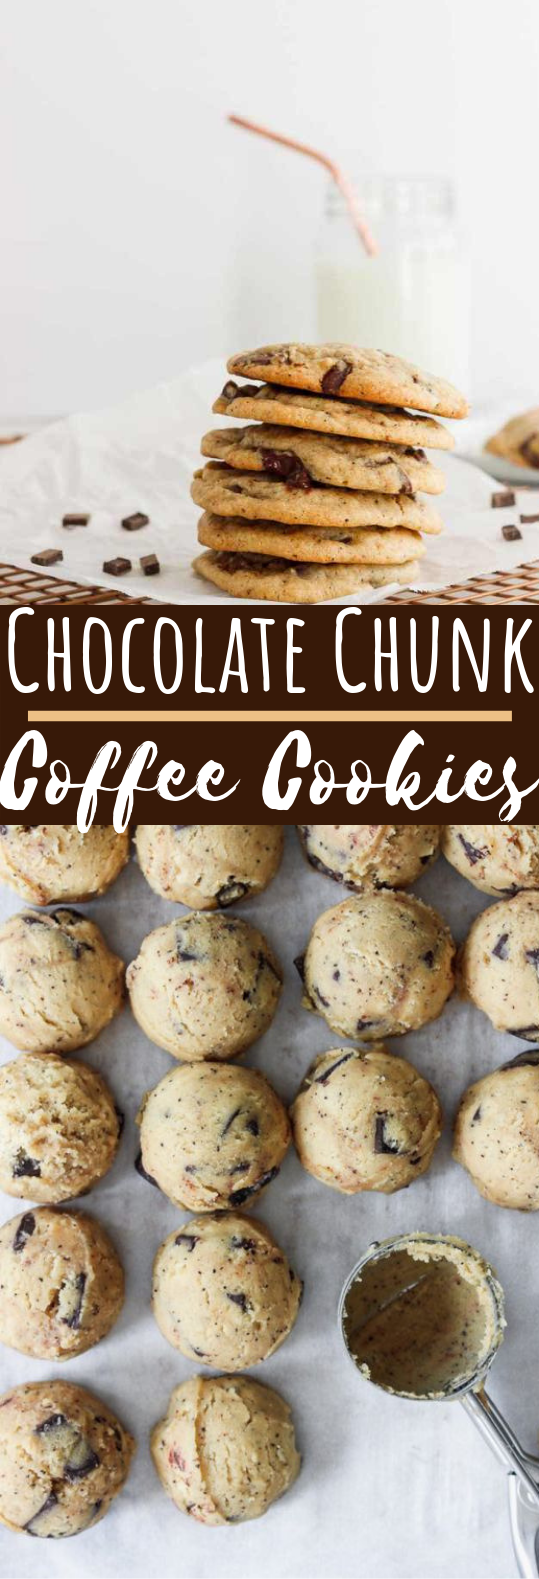 Chocolate Chunk Coffee Cookies #desserts #cookies